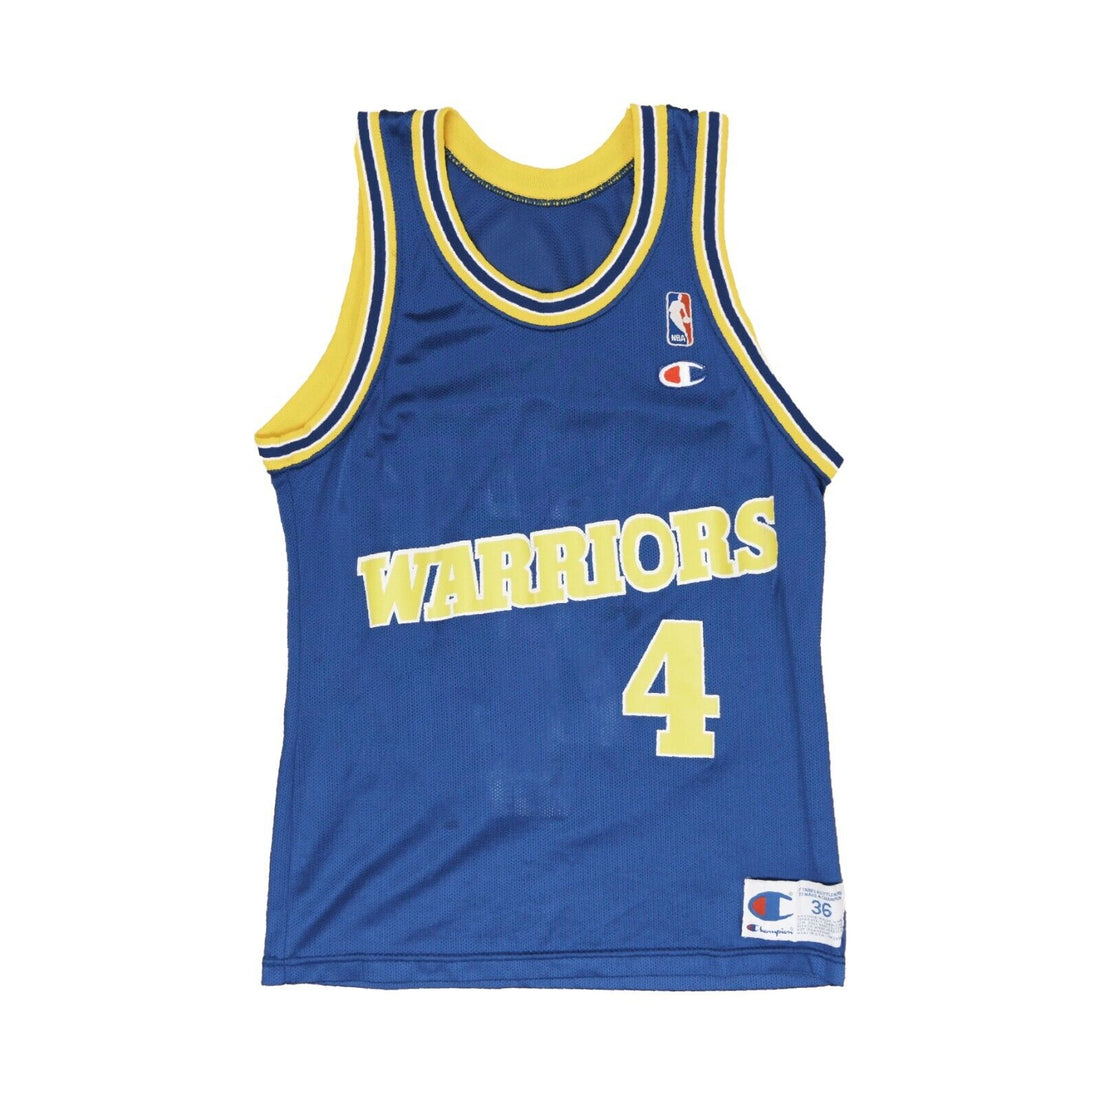 Vintage Golden State Warriors Chris Webber Champion Jersey Size 36 NBA